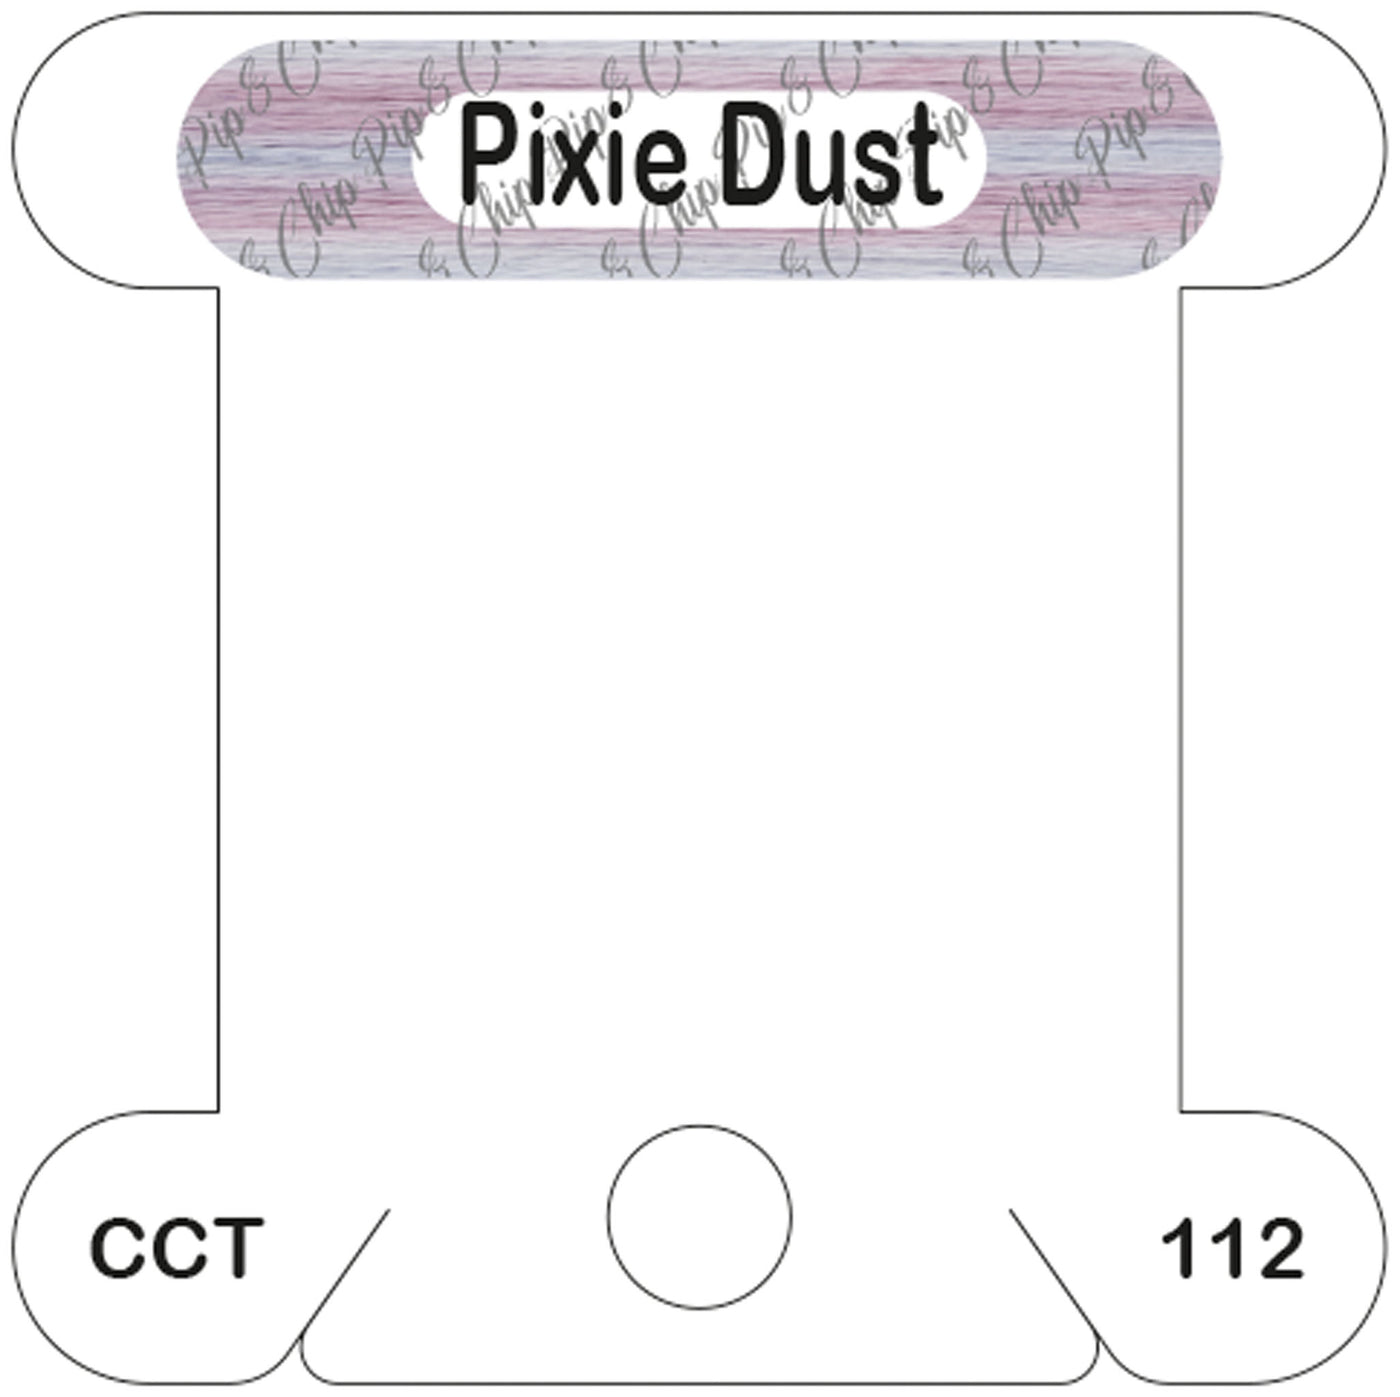 Classic Colorworks Pixie Dust acrylic bobbin